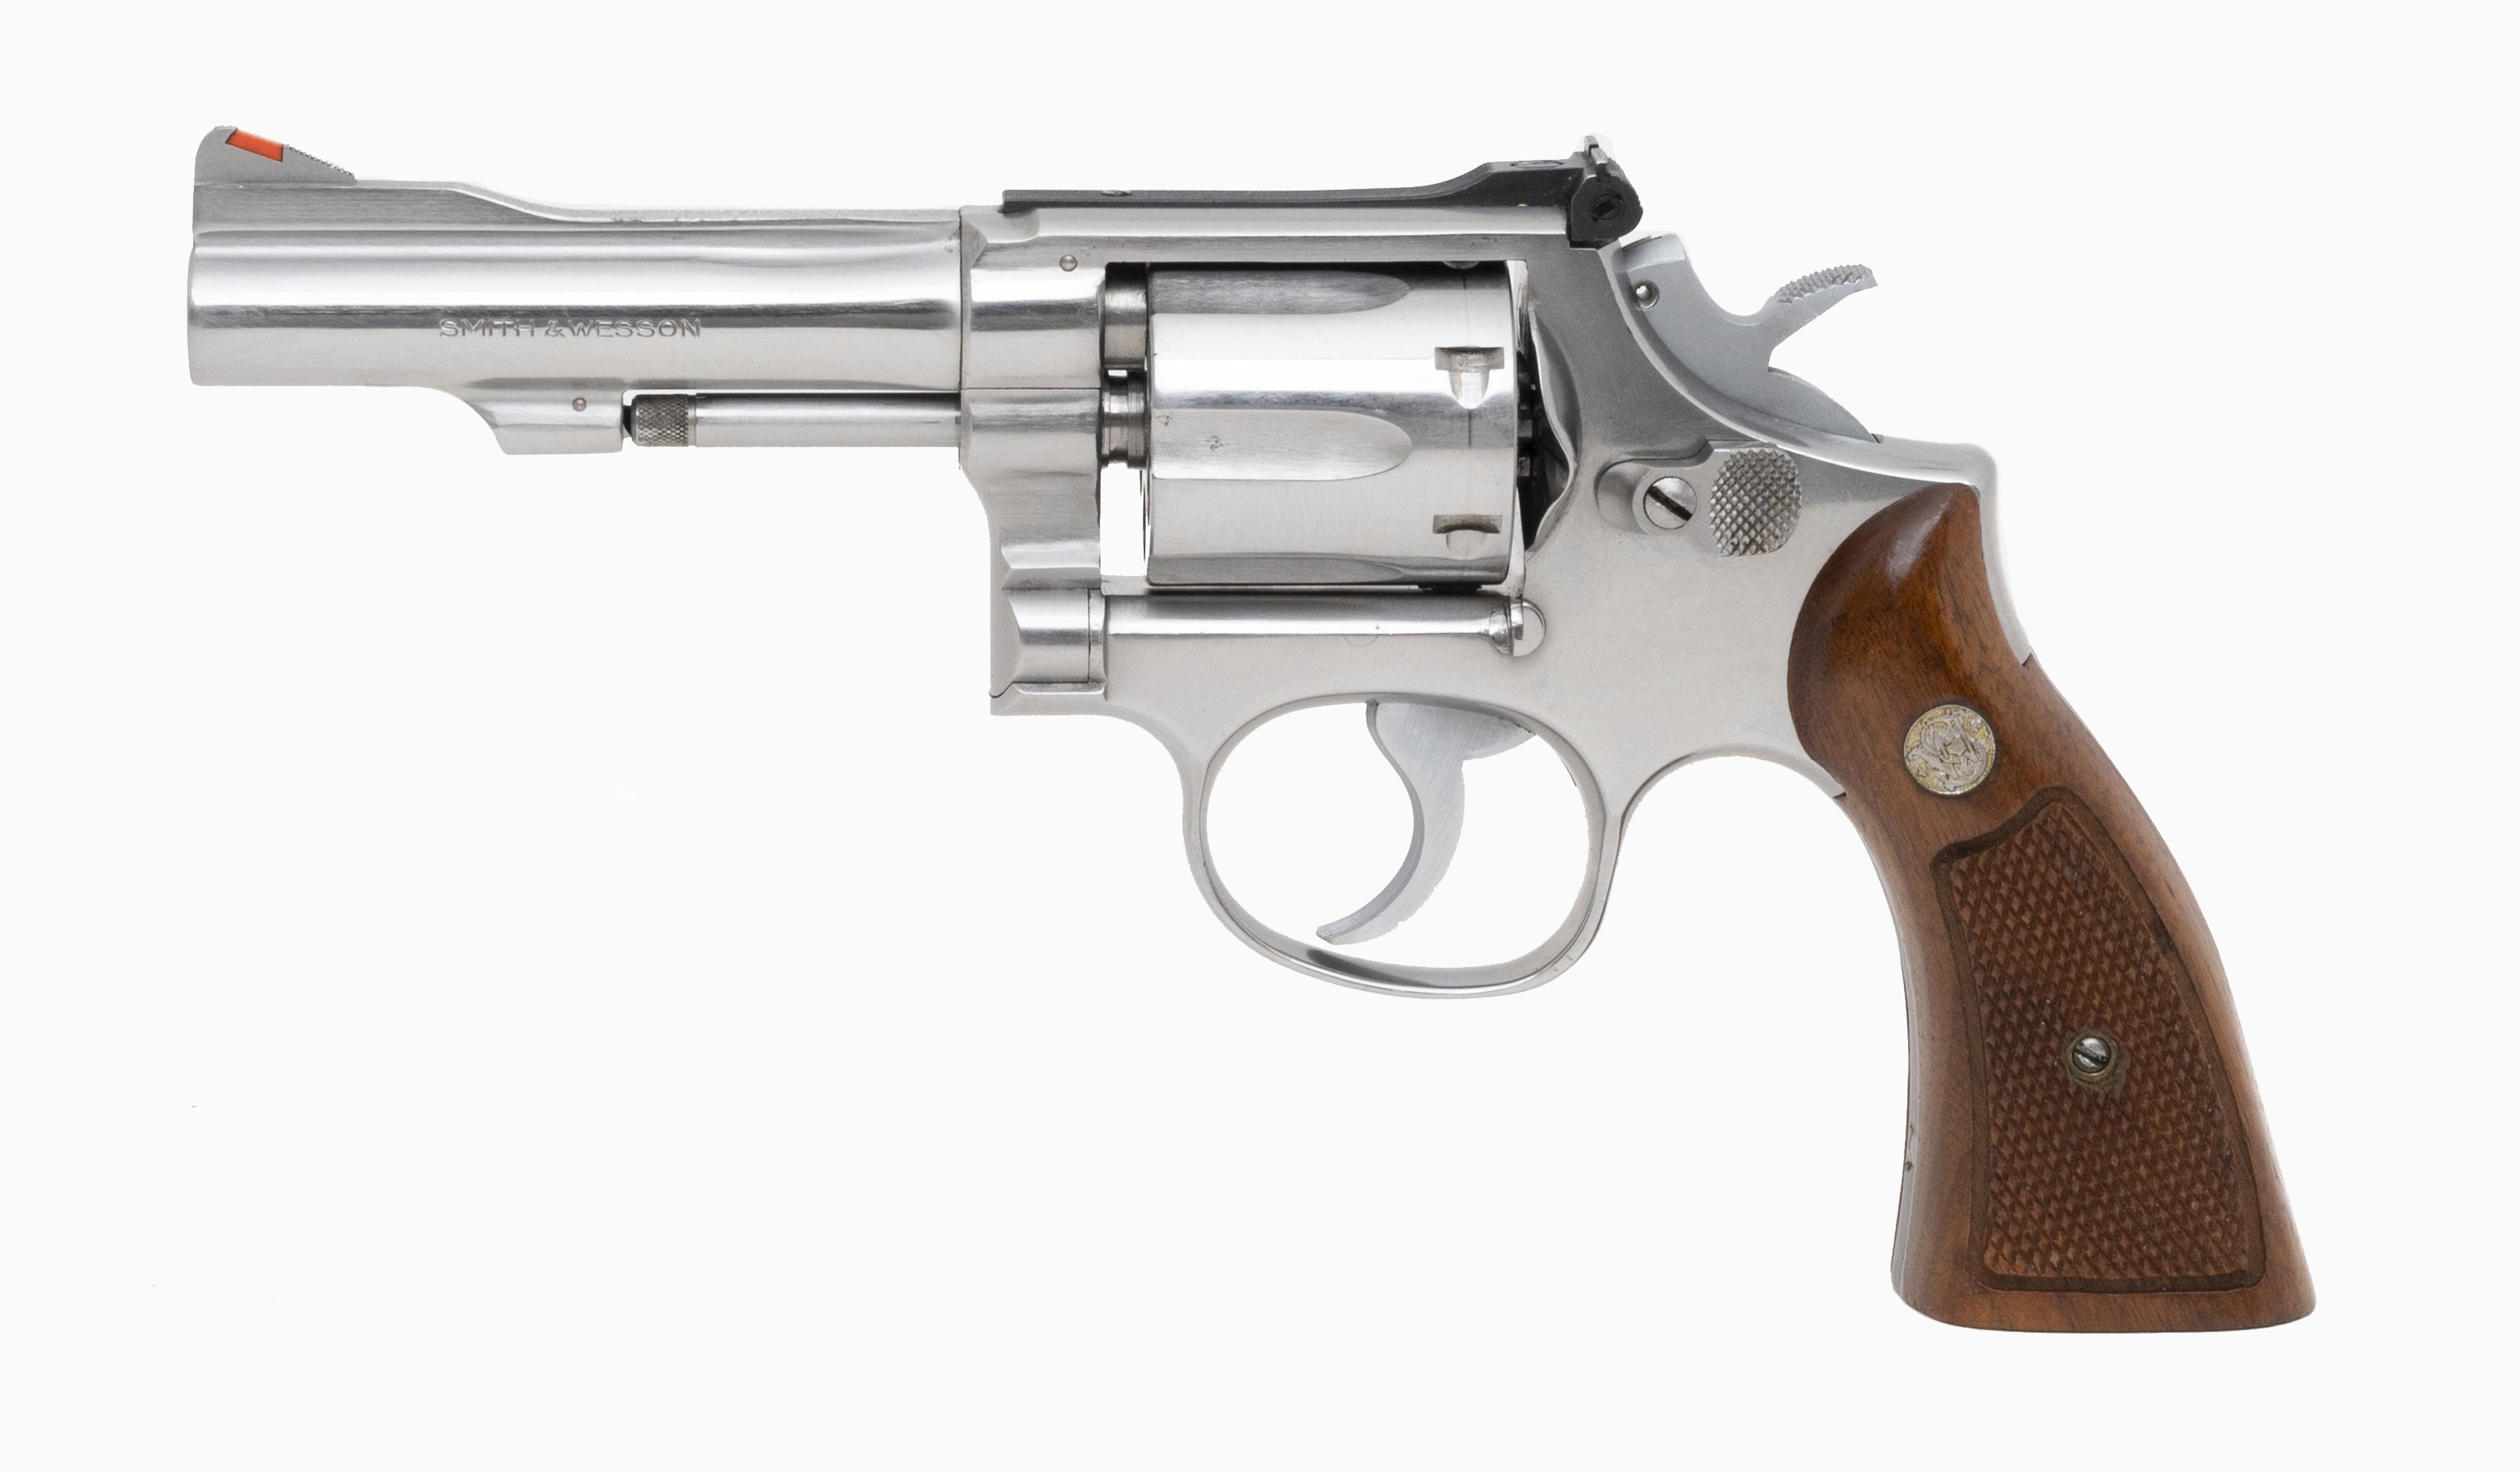 Smith & Wesson 67-1 .38 Special caliber revolver for sale.